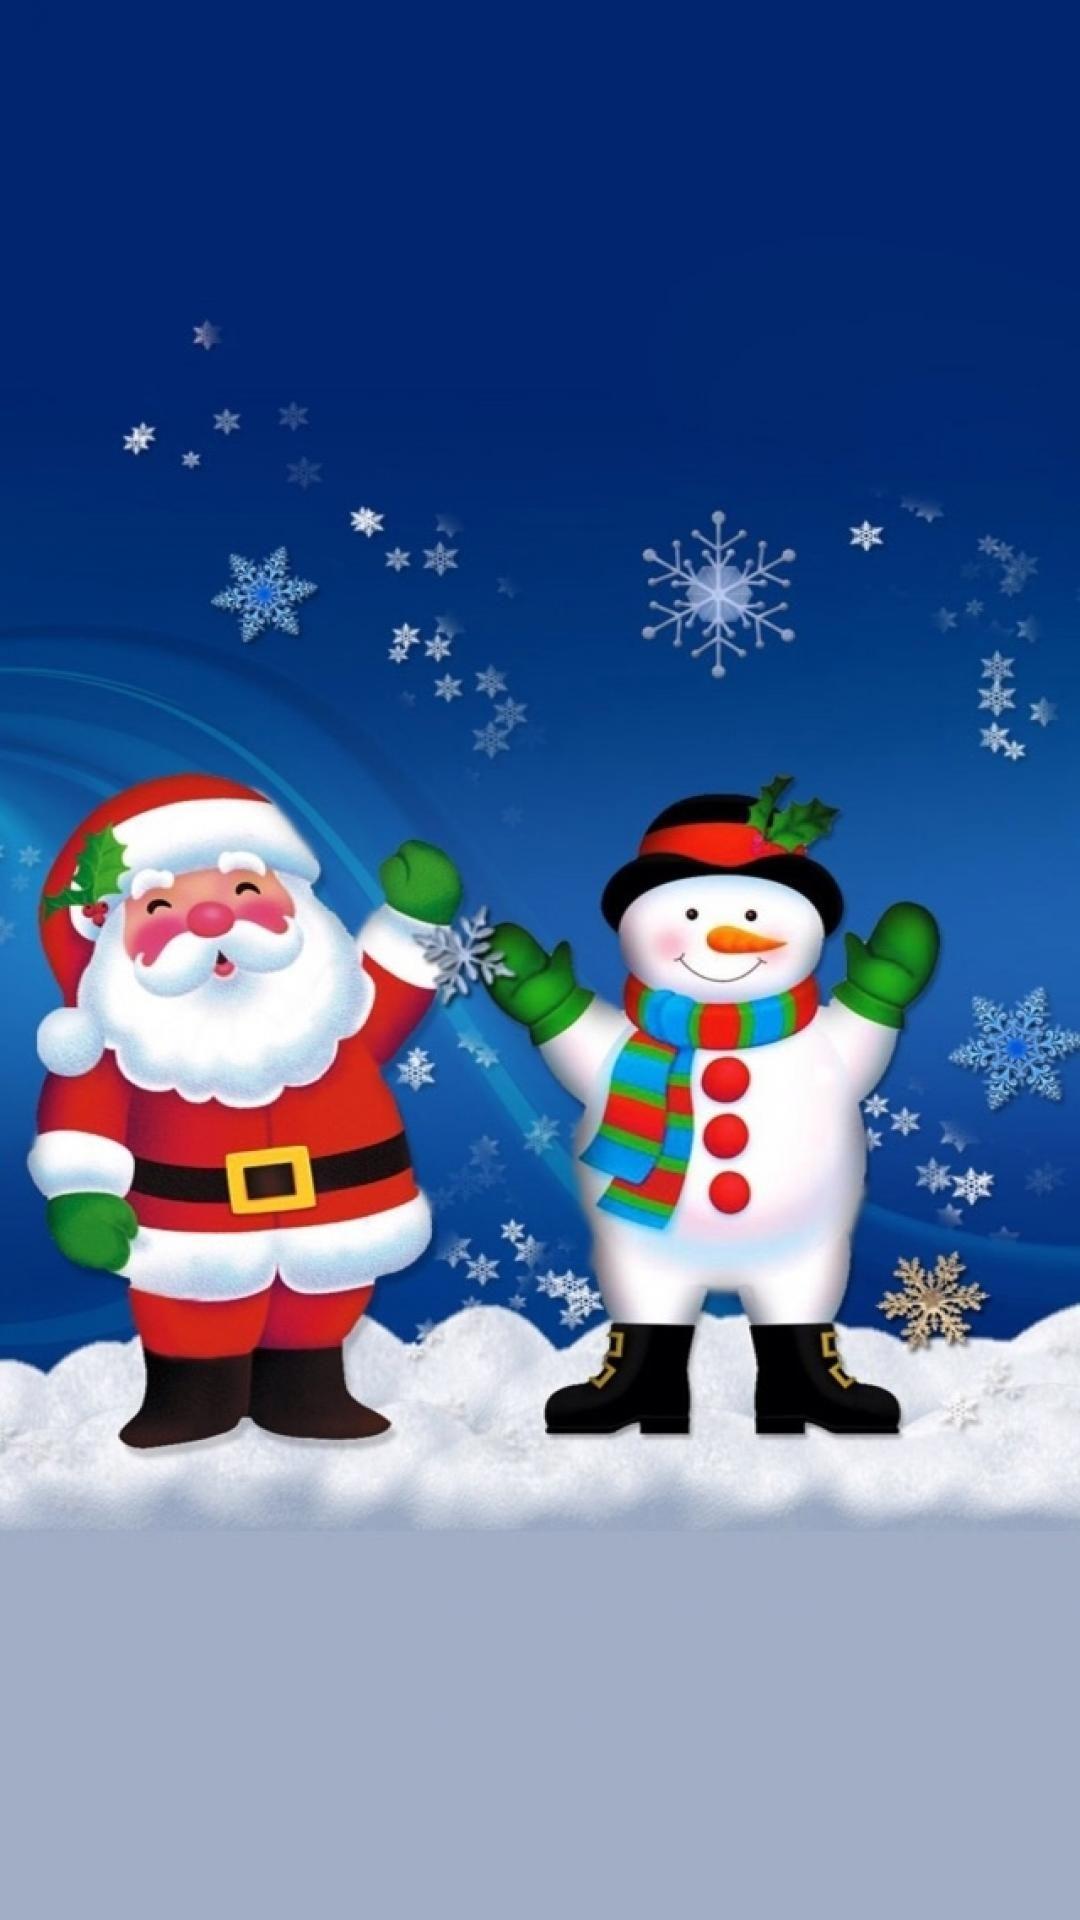 Merry Christmas Santa Claus And Snowman #wallpaper. Merry